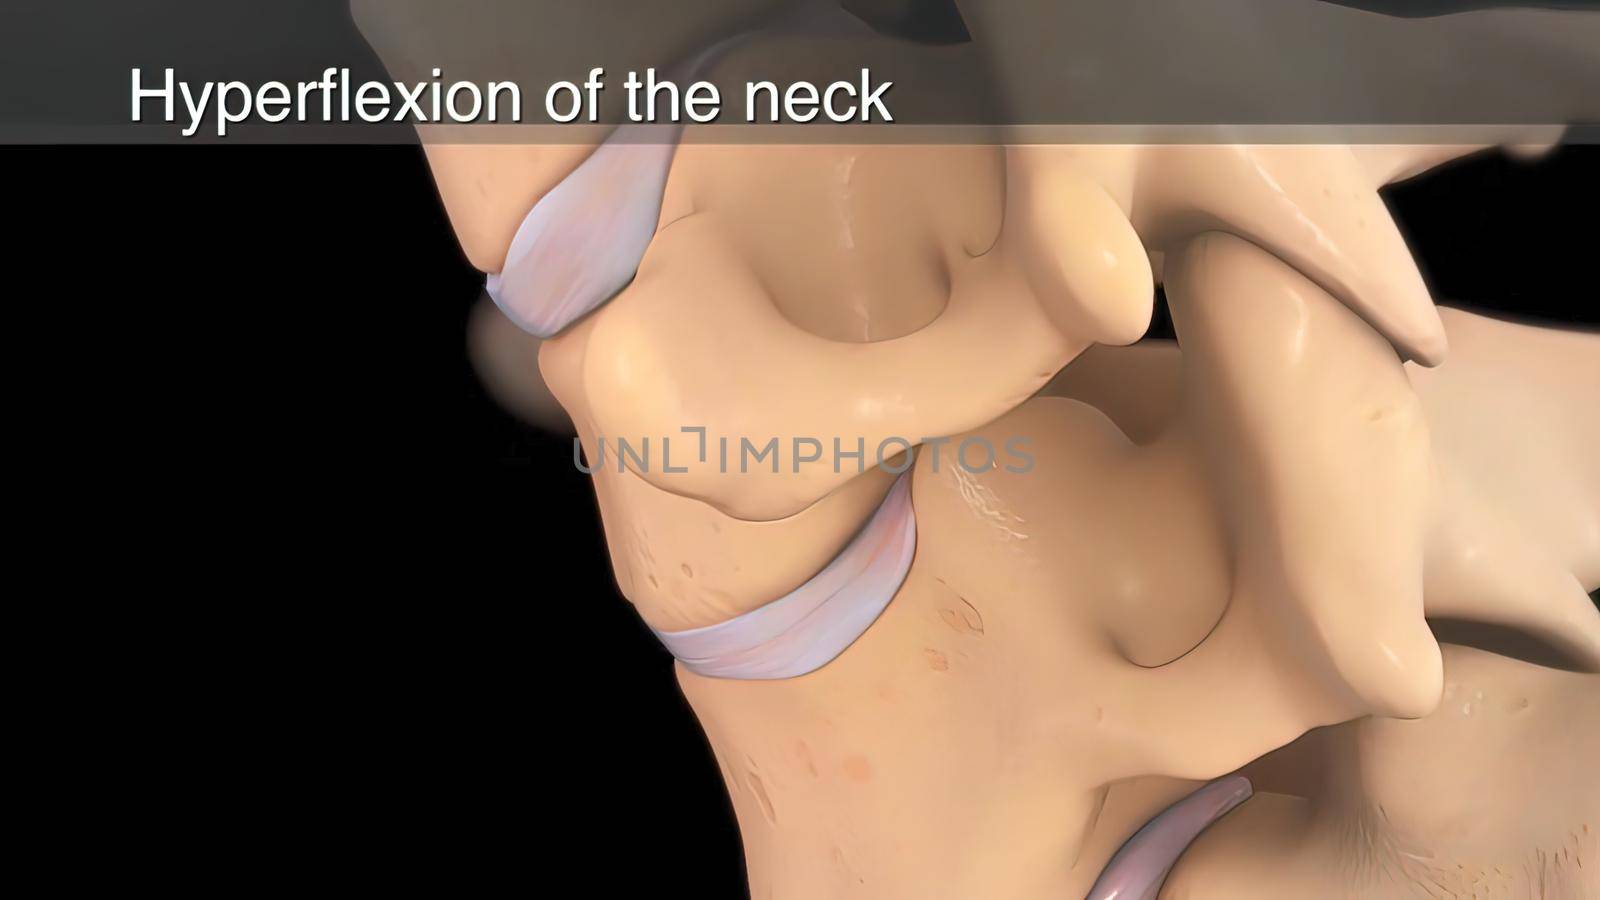 hyperflexion of the neck 3d illustration